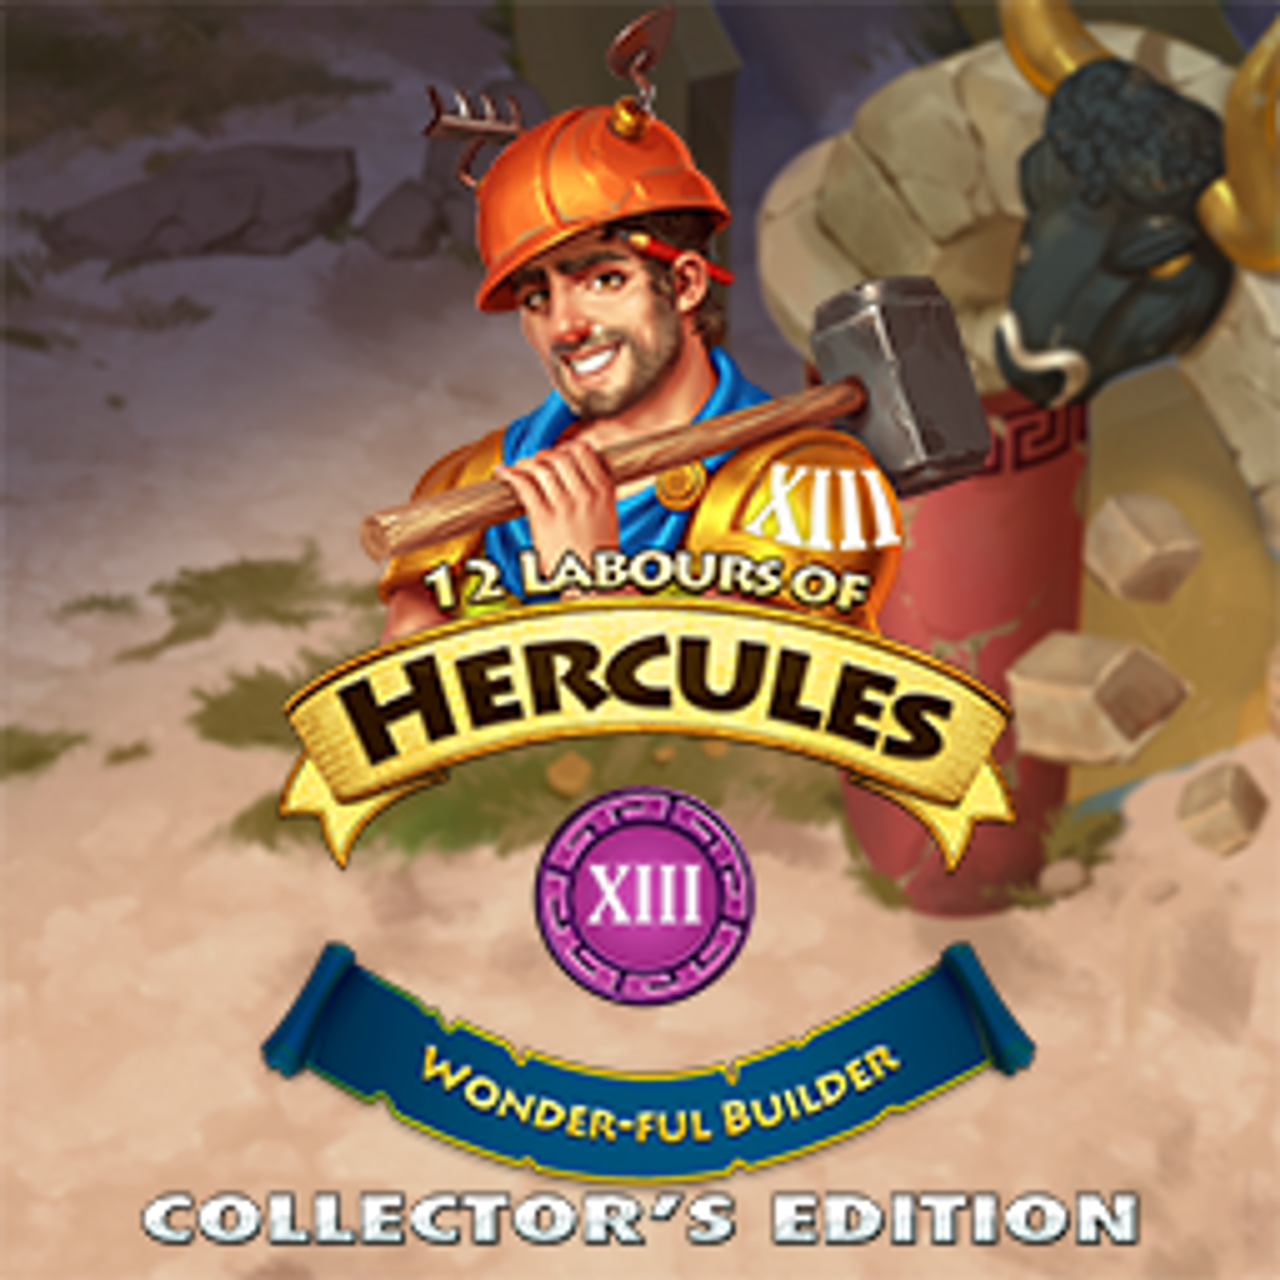 12 Labours of Hercules XIII: Wonder-ful Builder Collector's Edit